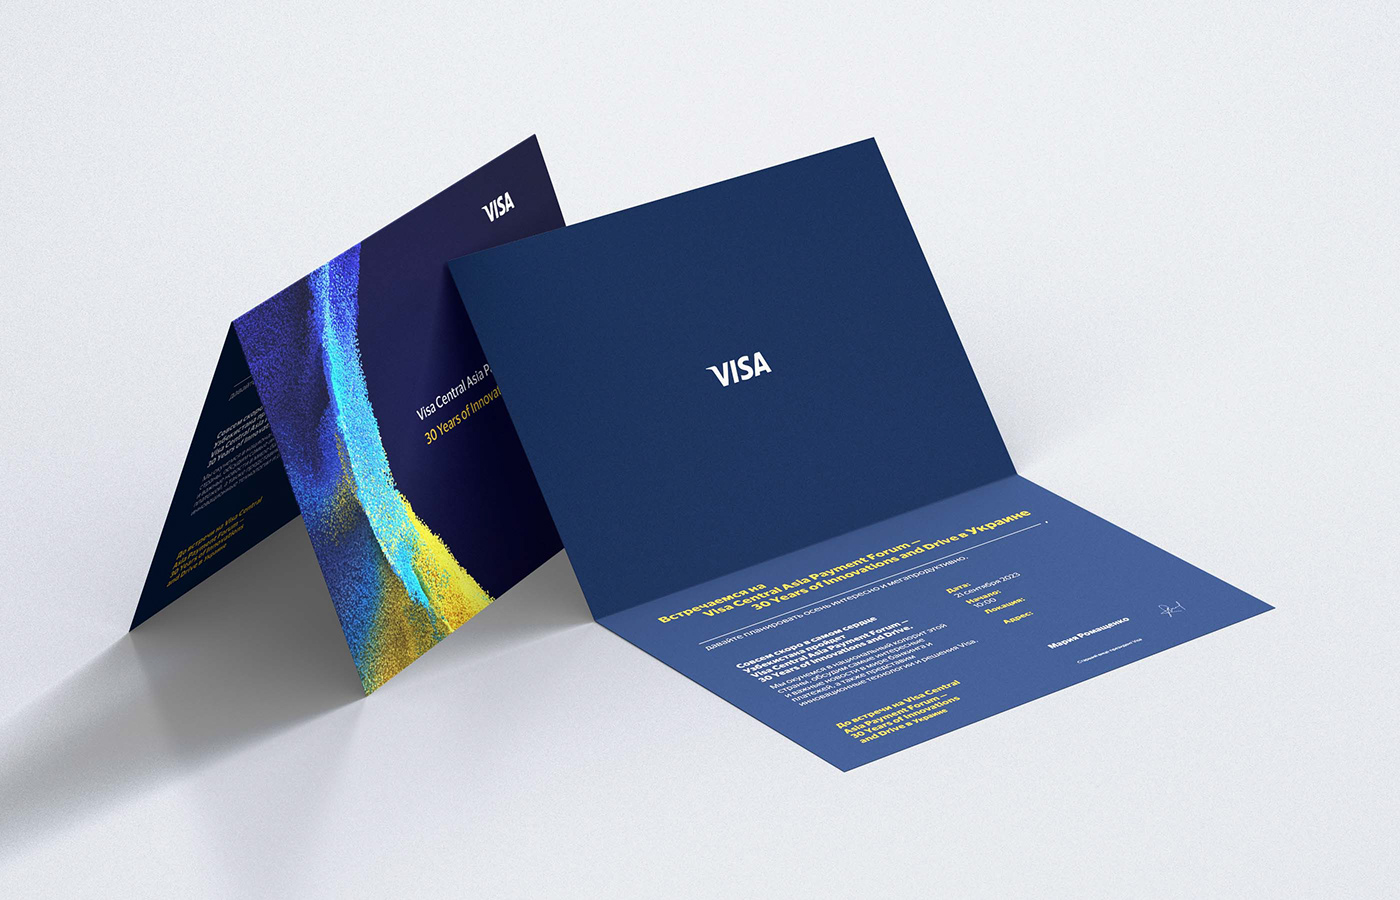 Visa Identity Design graphic design  brand identity branding  visual identity marketing   notebook cover design digital illustration accesories design